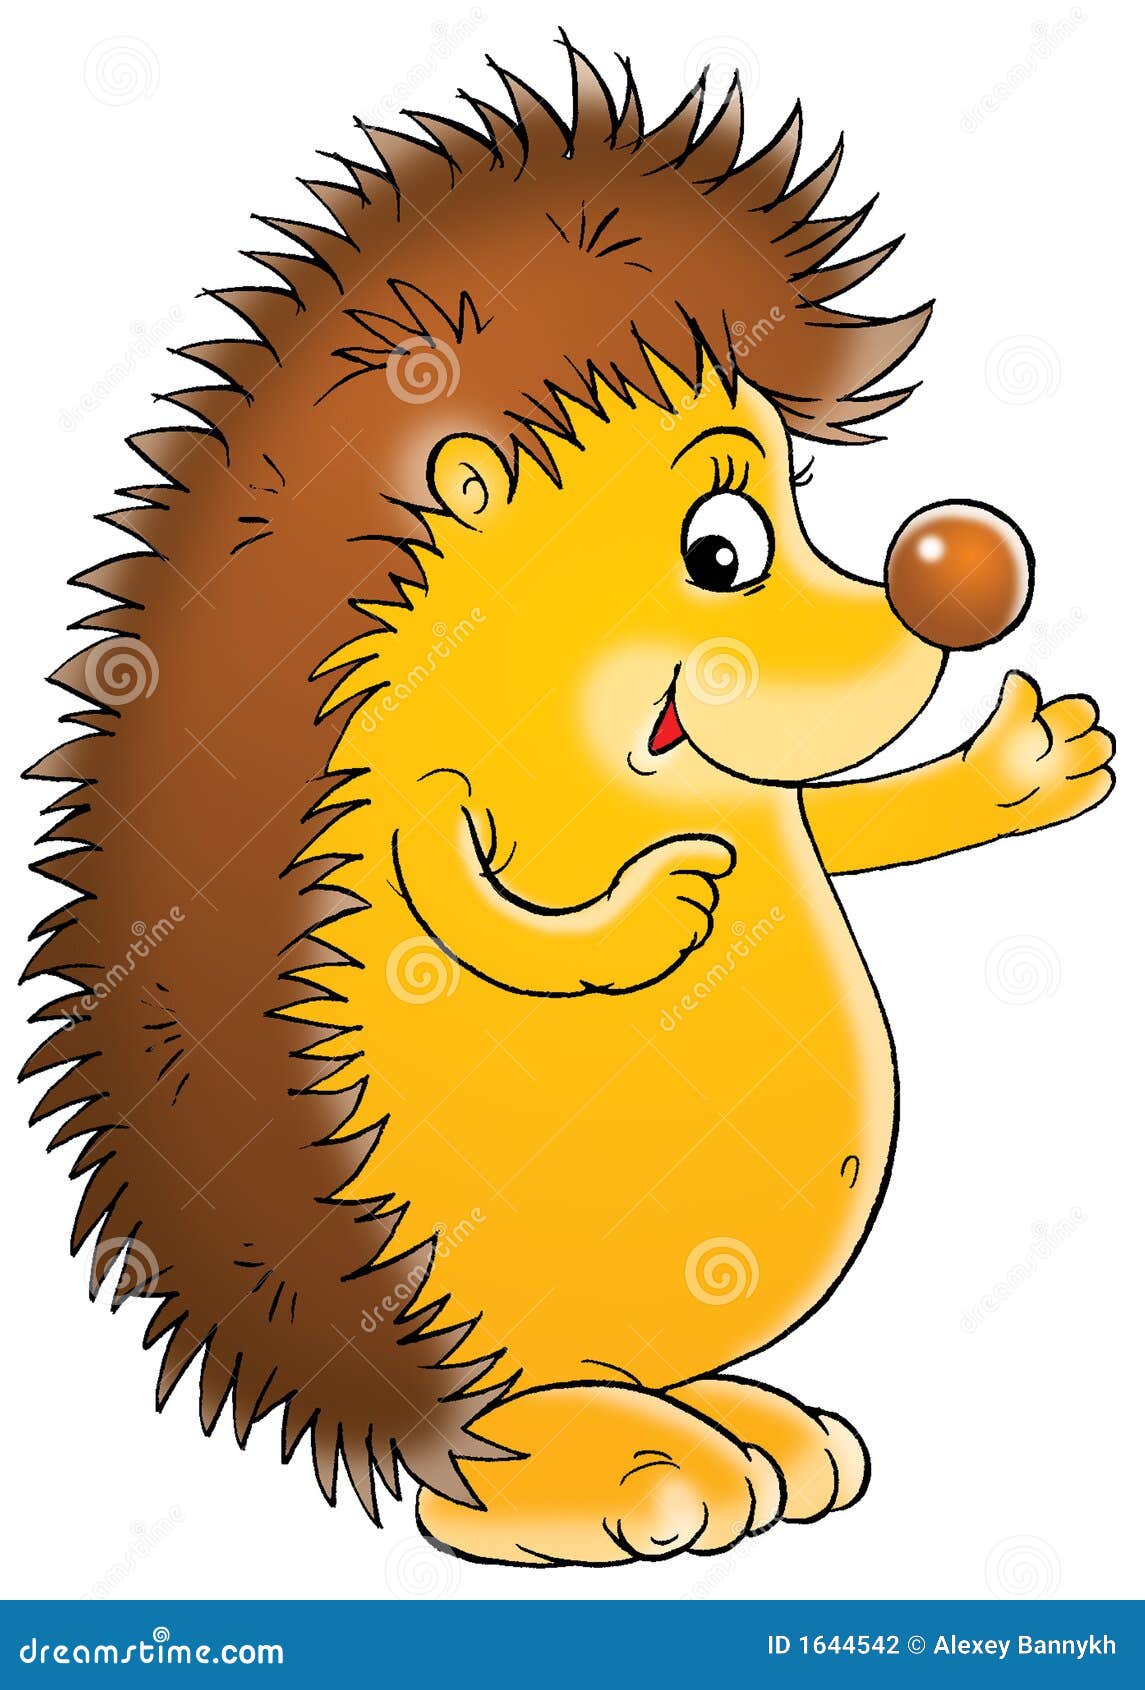 clipart of hedgehog - photo #31